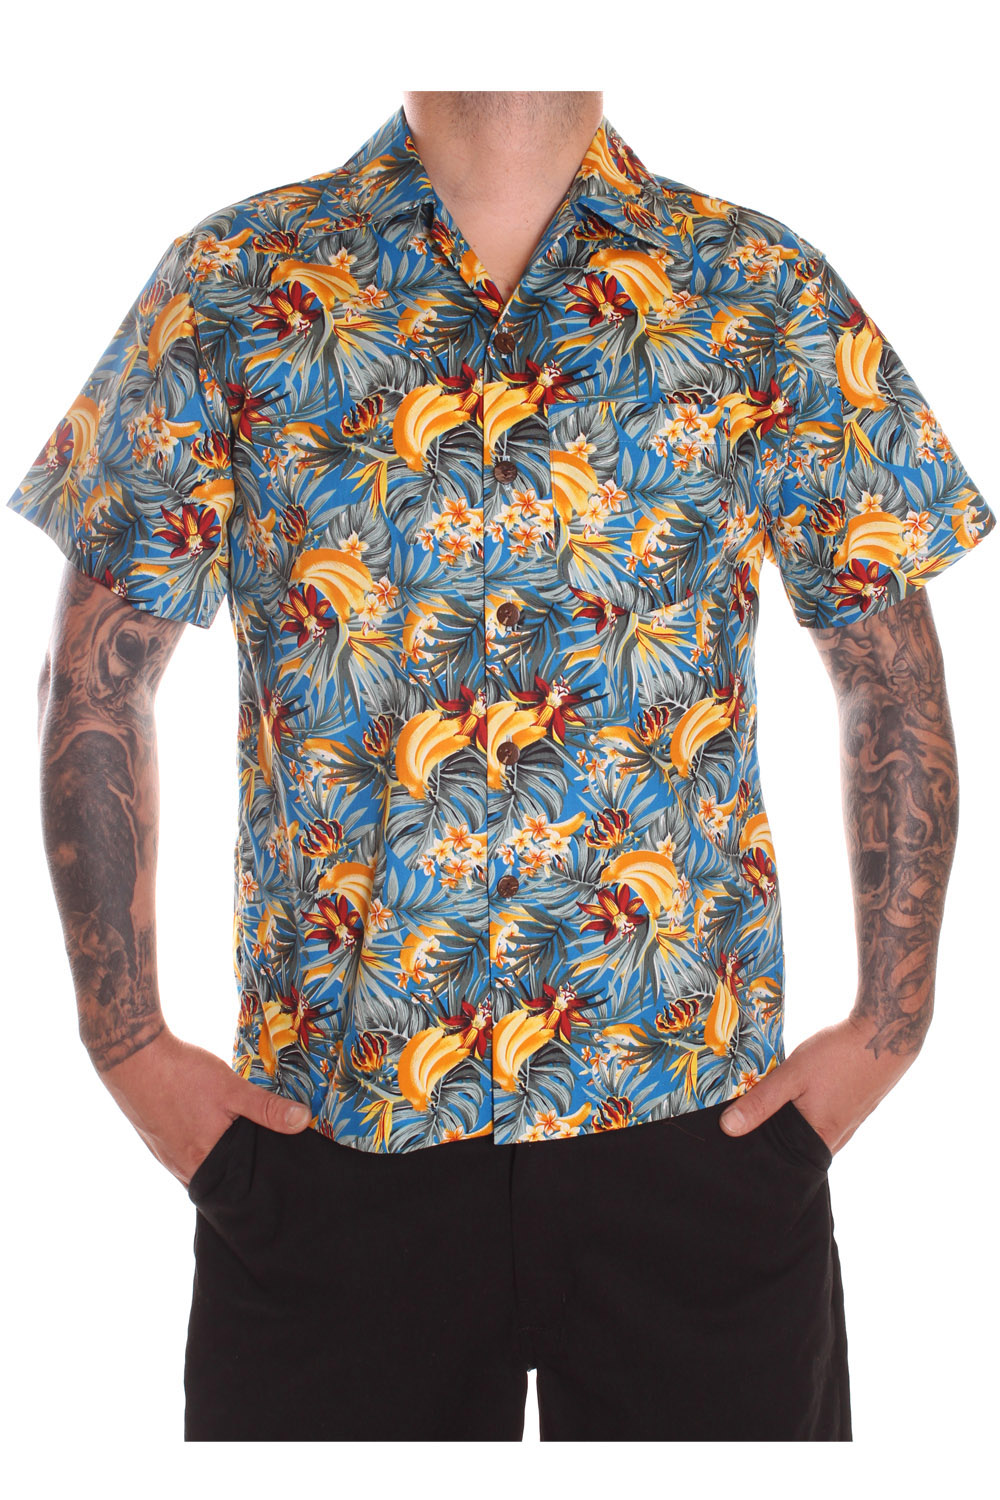 50s Style retro Hawaii Blumen rockabilly Hawaiihemd Shirt Bananen blau d